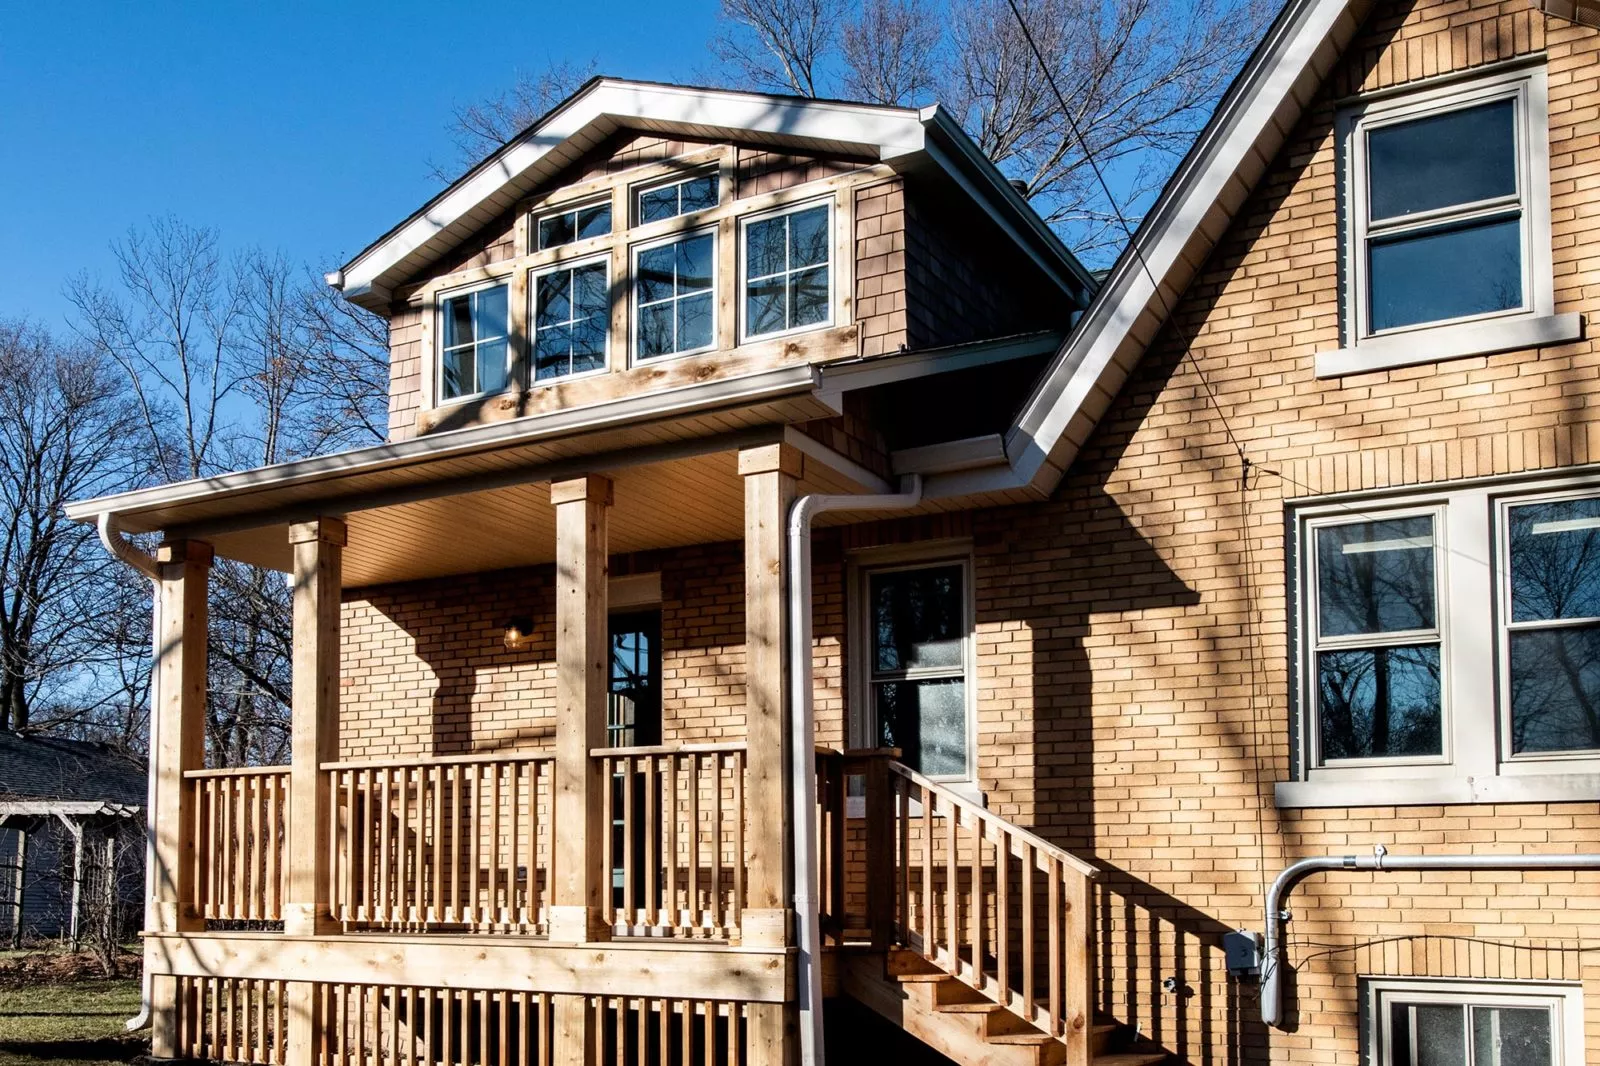 Exterior view of home with second-story cedar shake dormer, matching porch columns, railings, & light brown brick